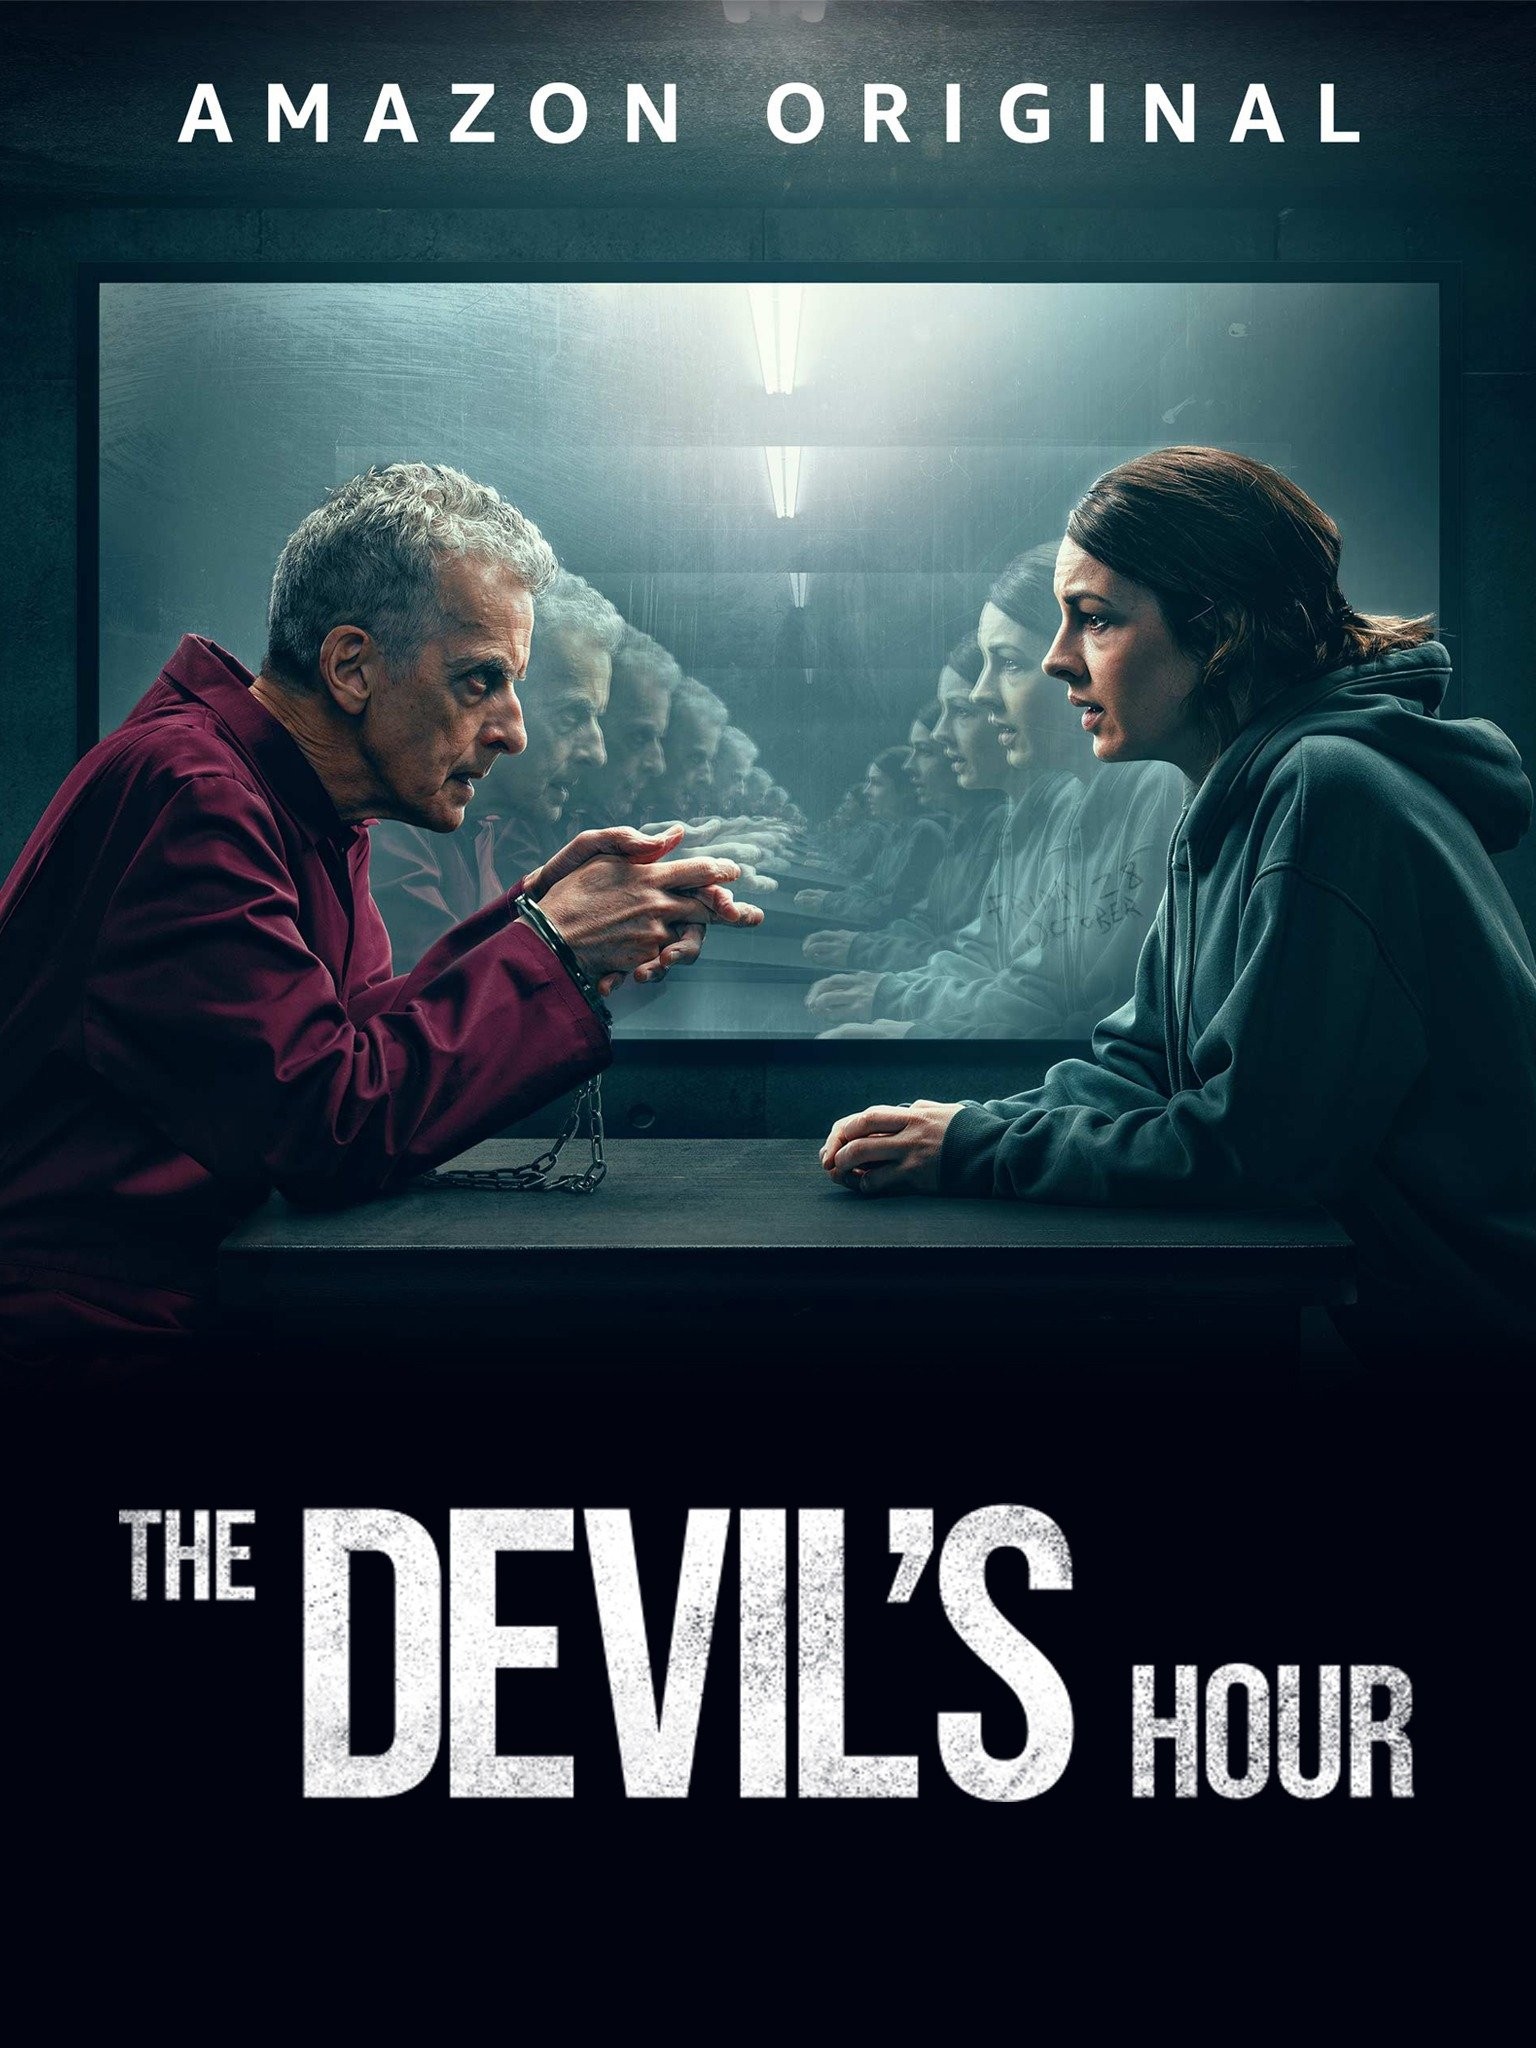 The Devil's Hour - Official Trailer